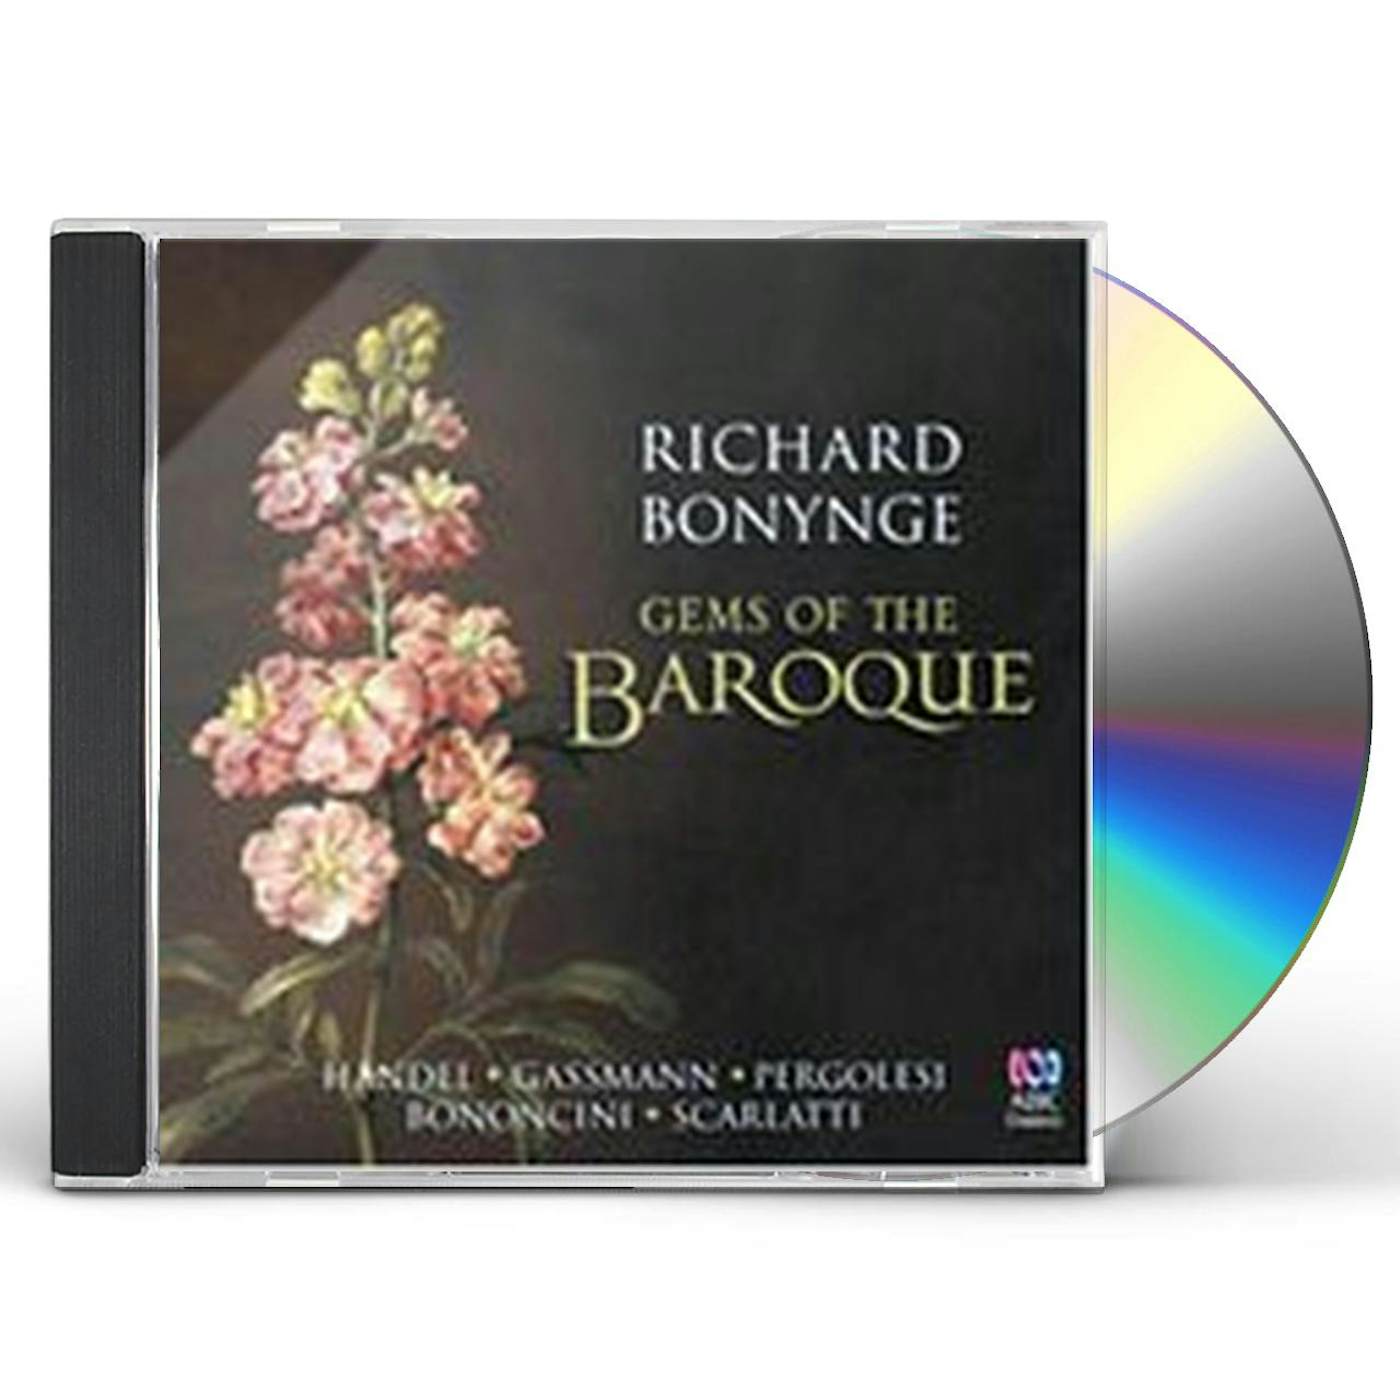 Richard Bonynge GEMS OF THE BAROQUE CD